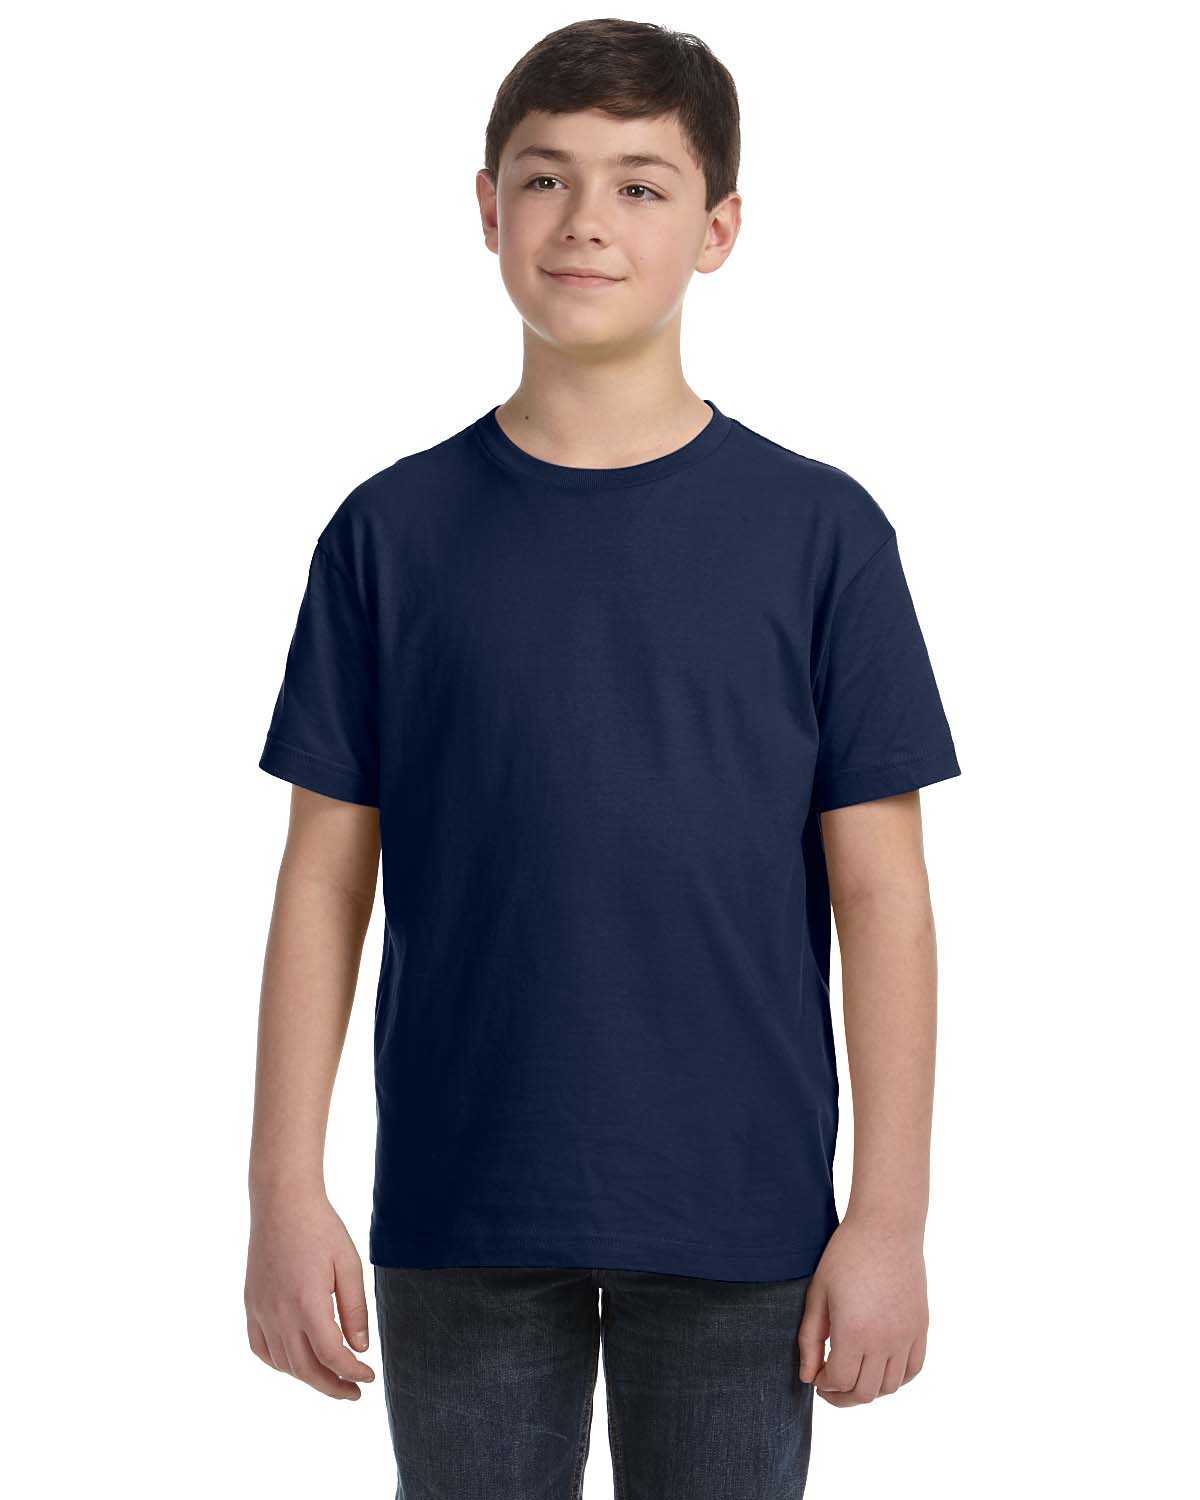 LAT 6101 Youth Fine Jersey T-Shirt | ApparelChoice.com